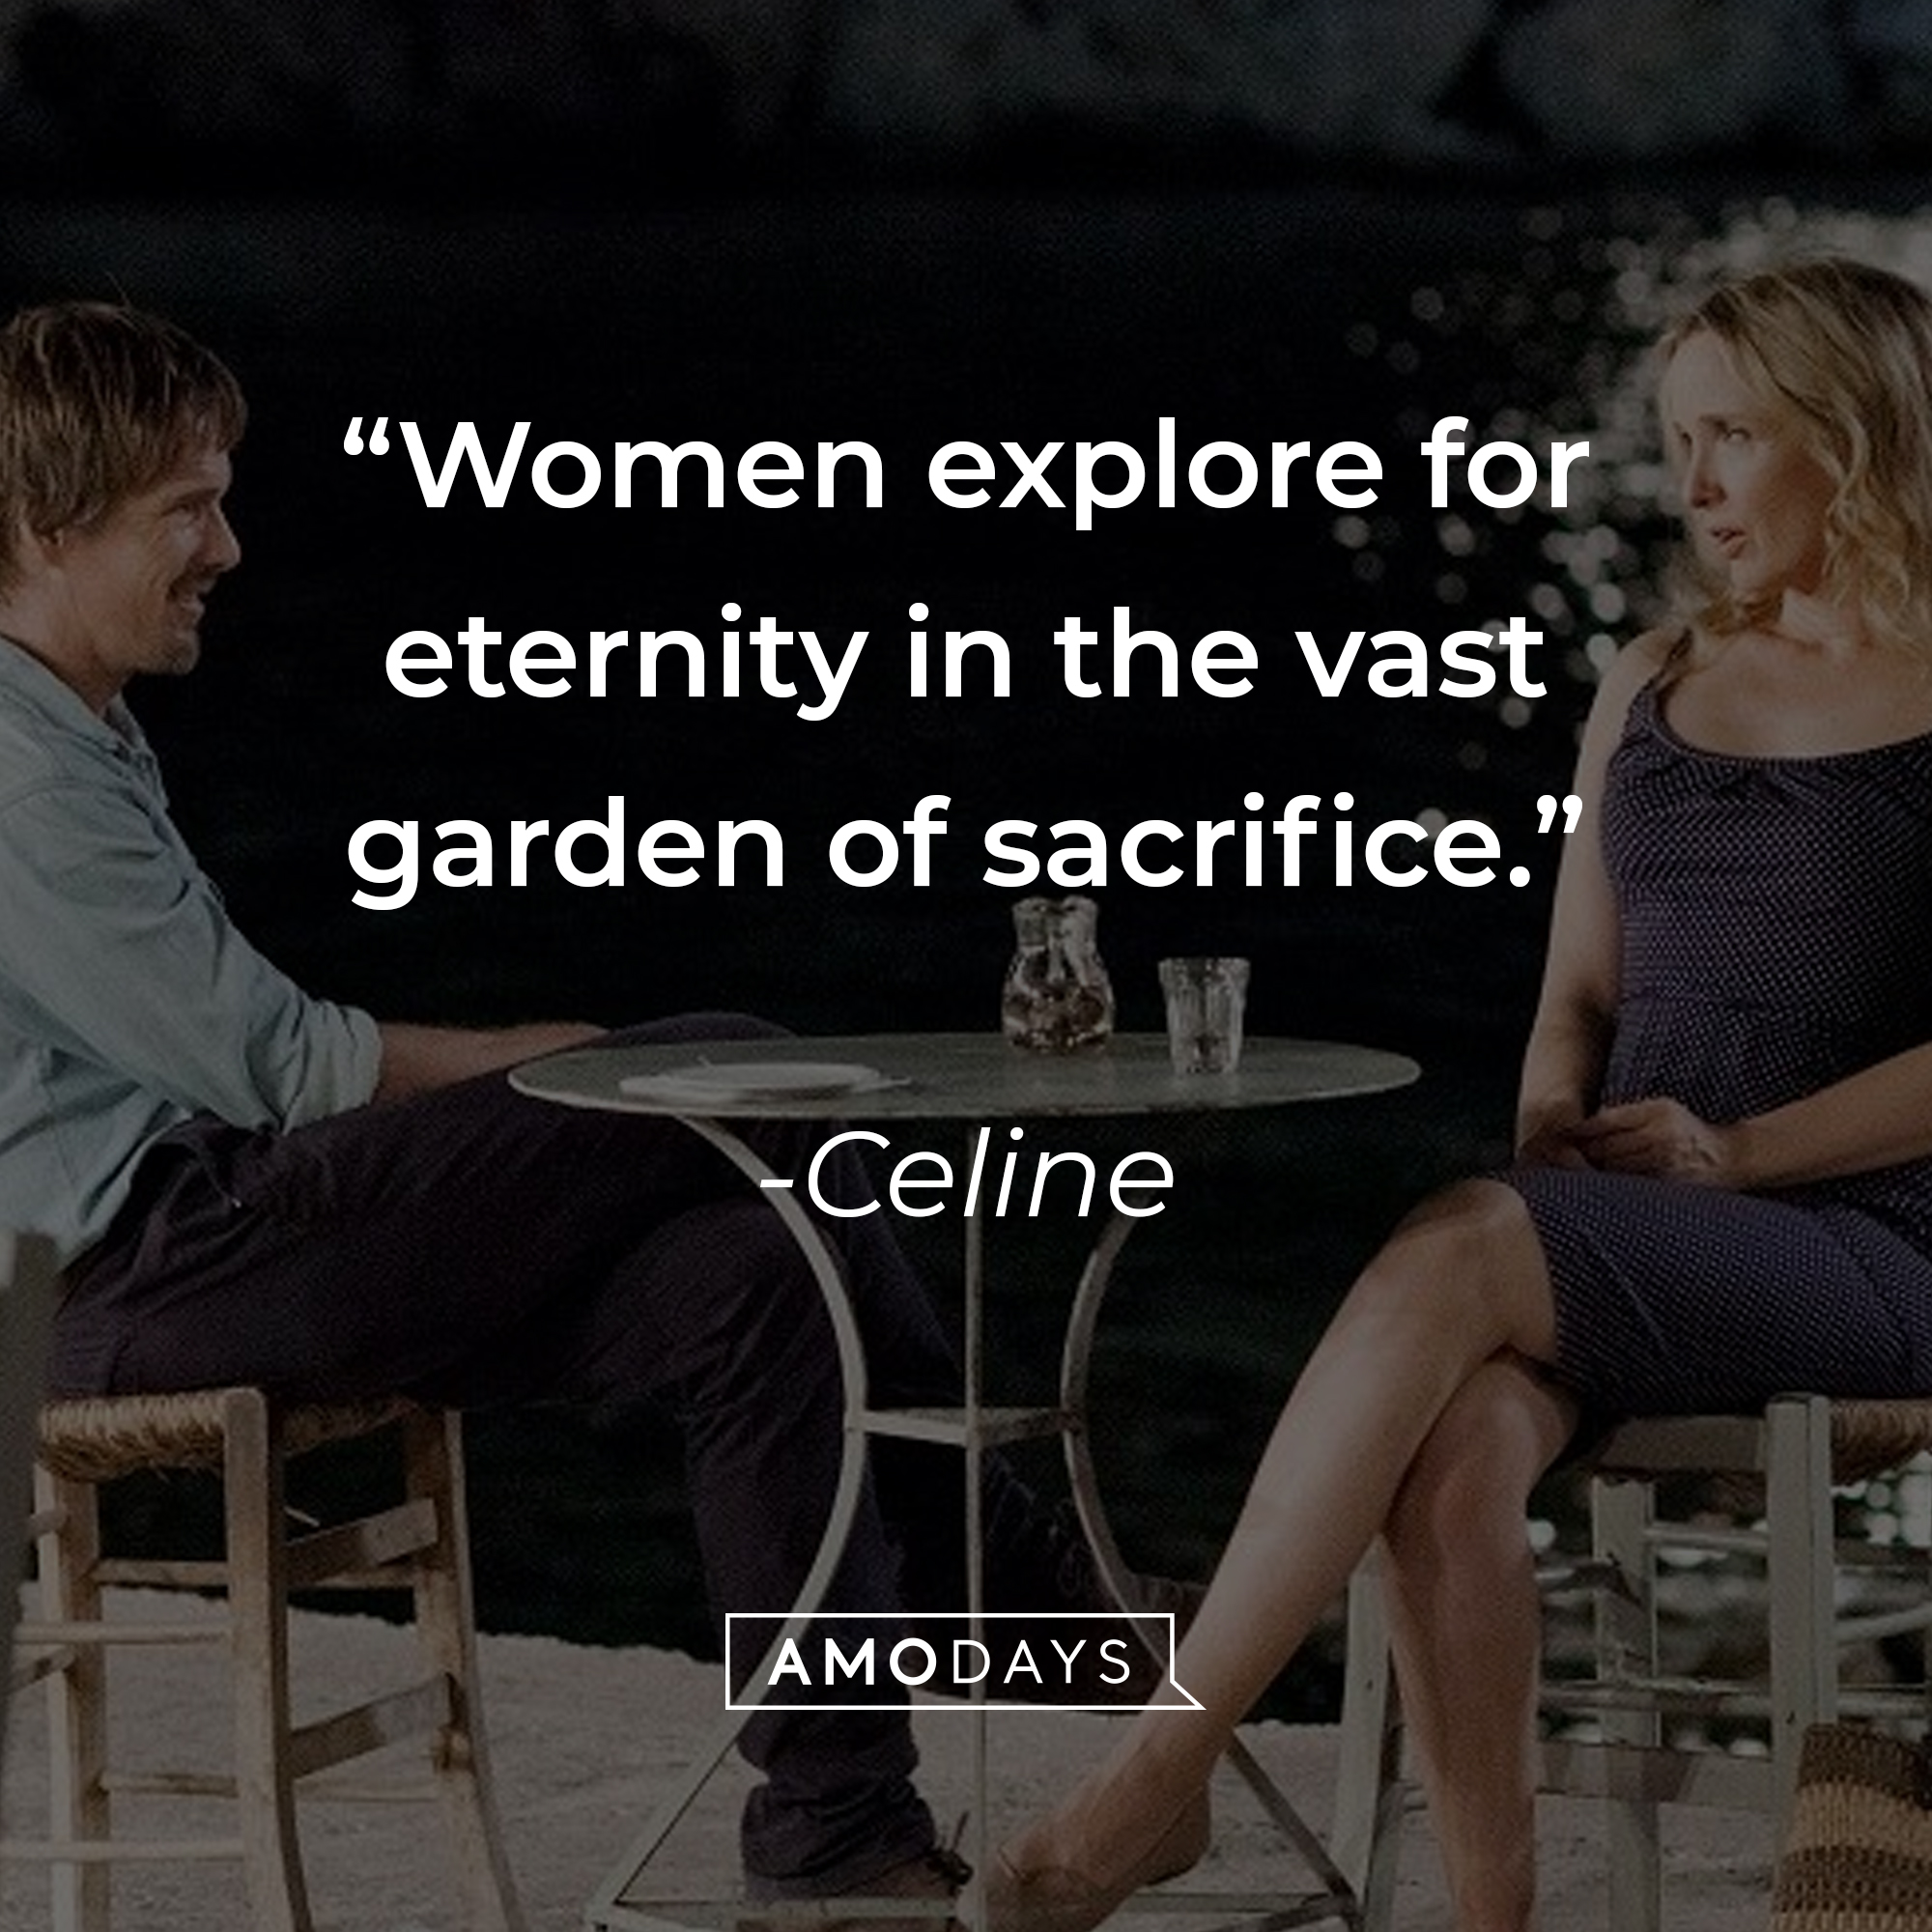 Jesse and Celine, with Celine’s quote: “Women explore for eternity in the vast garden of sacrifice.” │Source: facebook.com/BeforeMidnightFilm